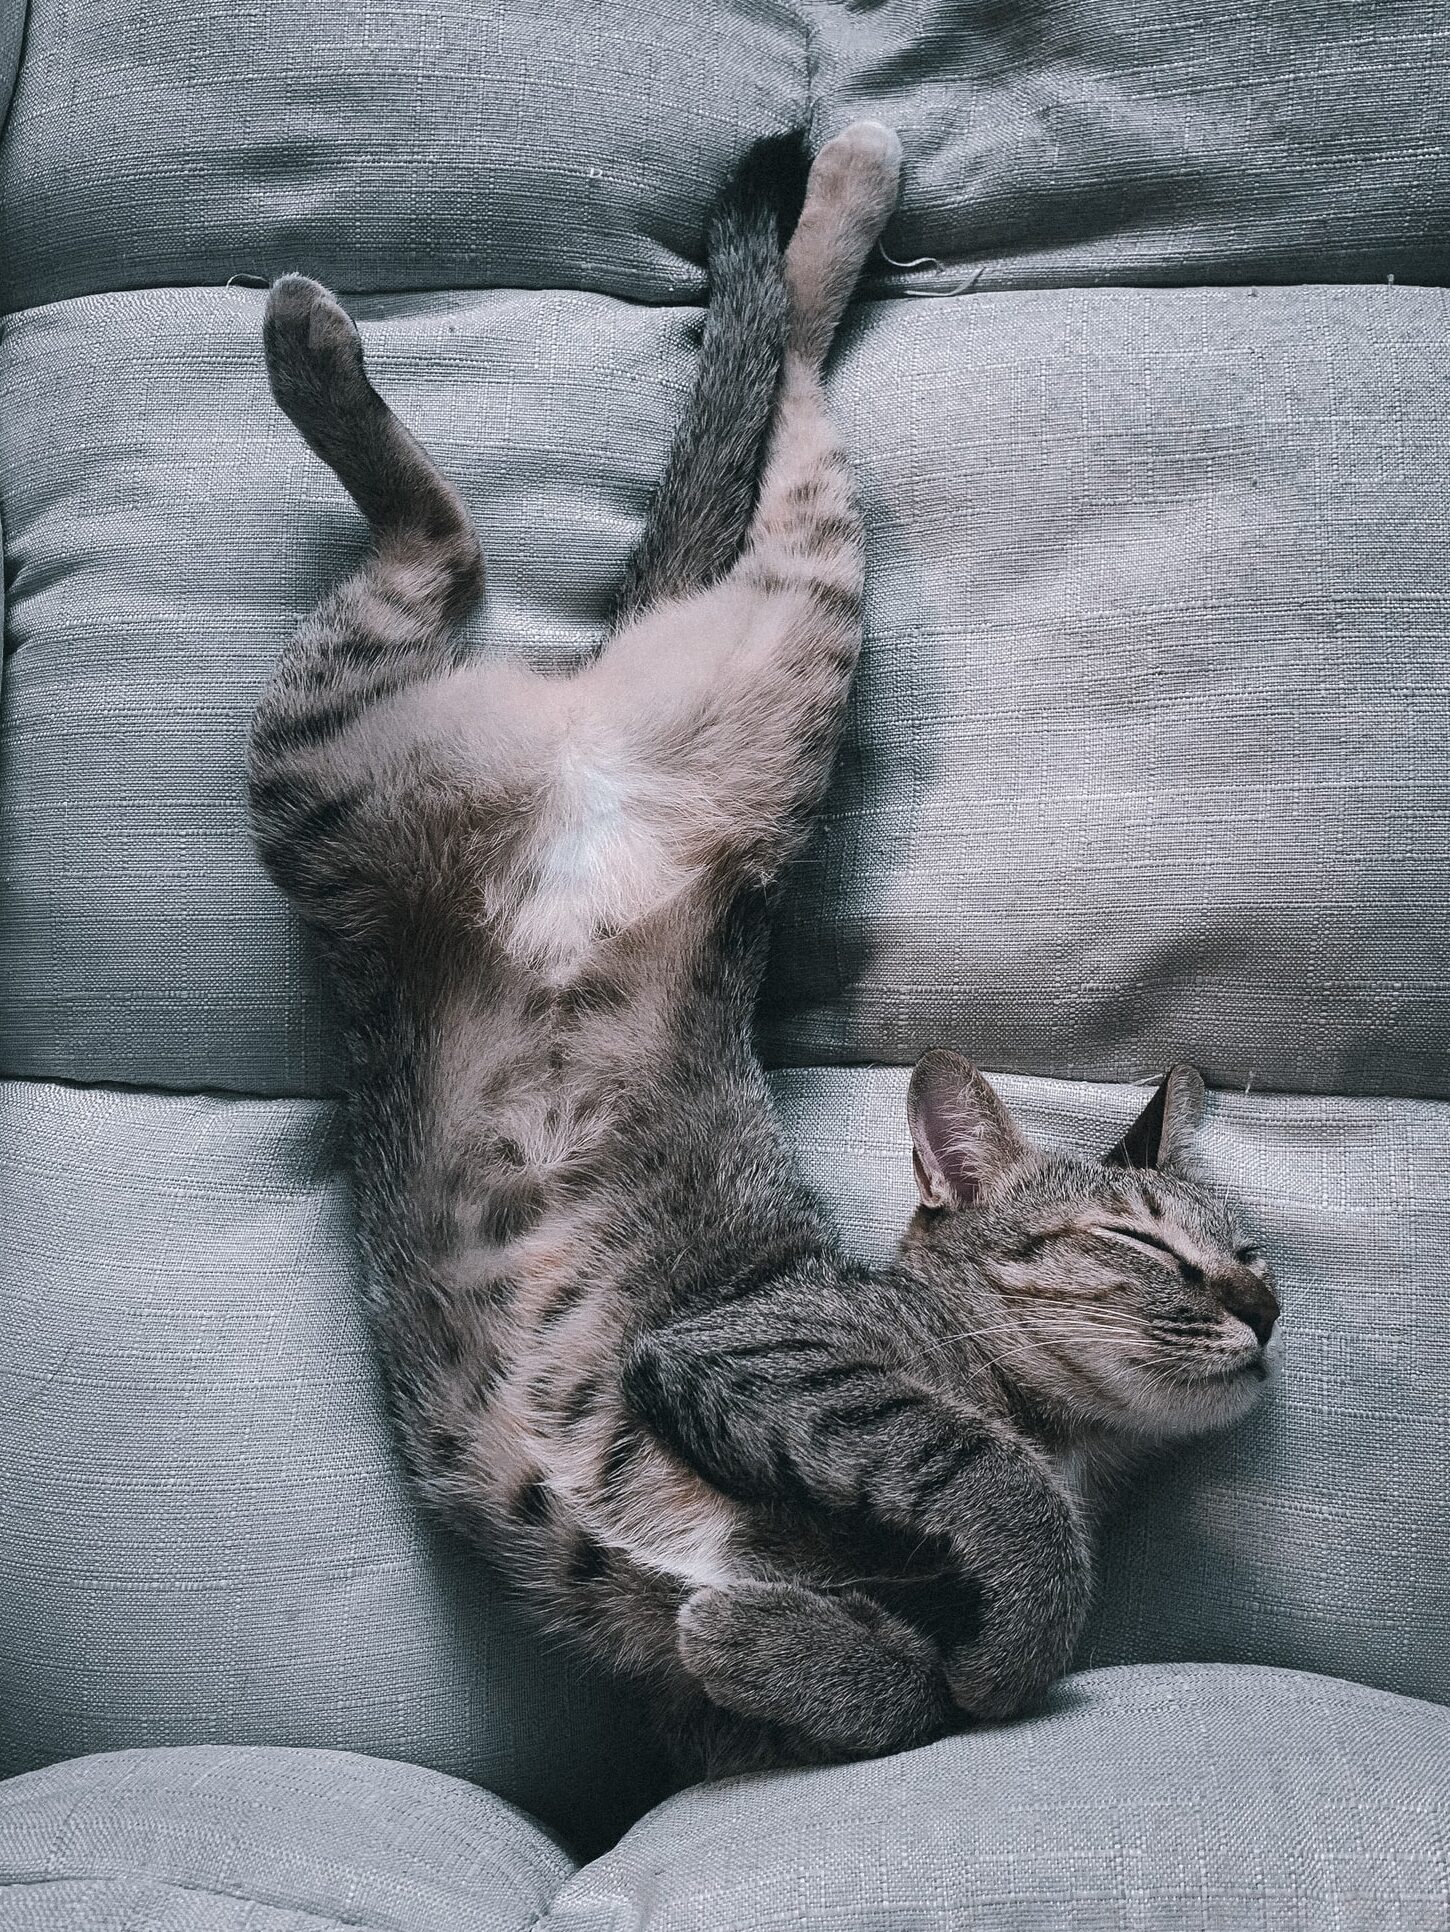 cat sleep belly-up